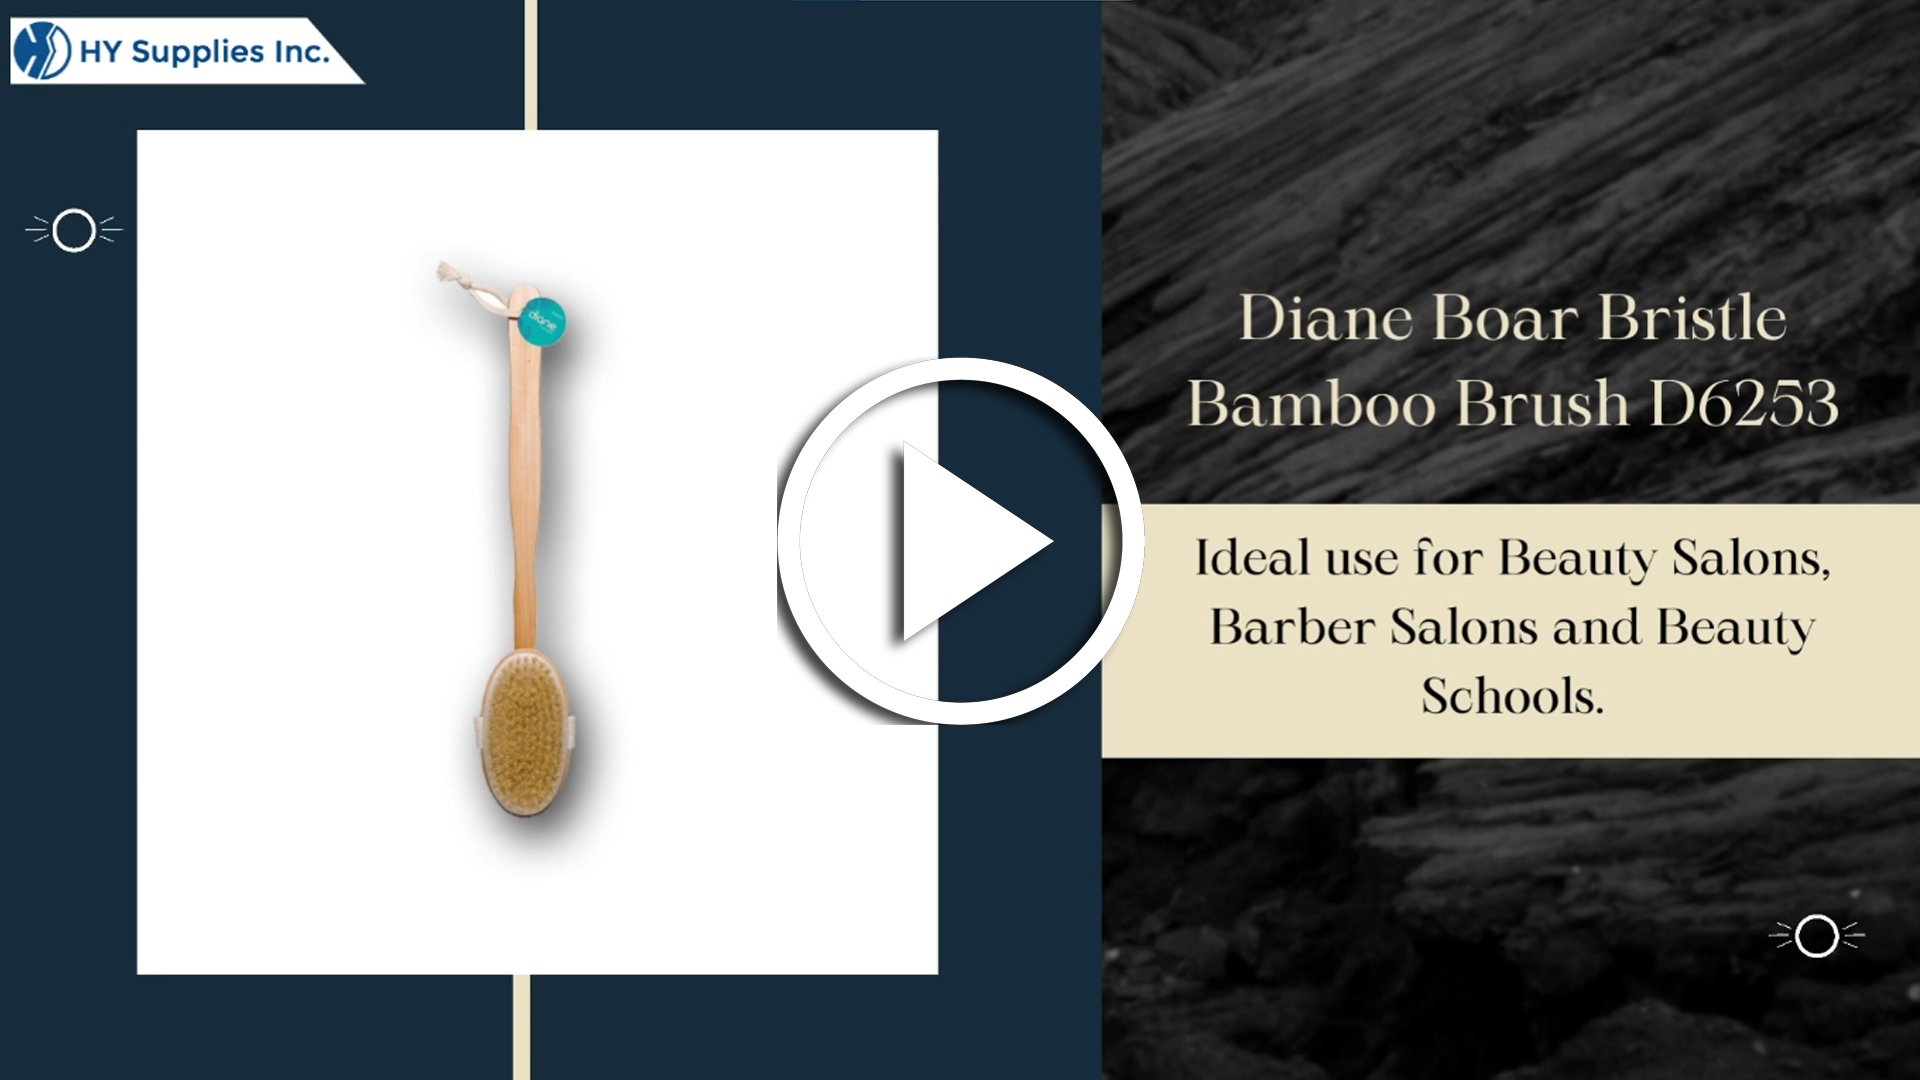 Diane Boar Bristle Bamboo Brush D6253